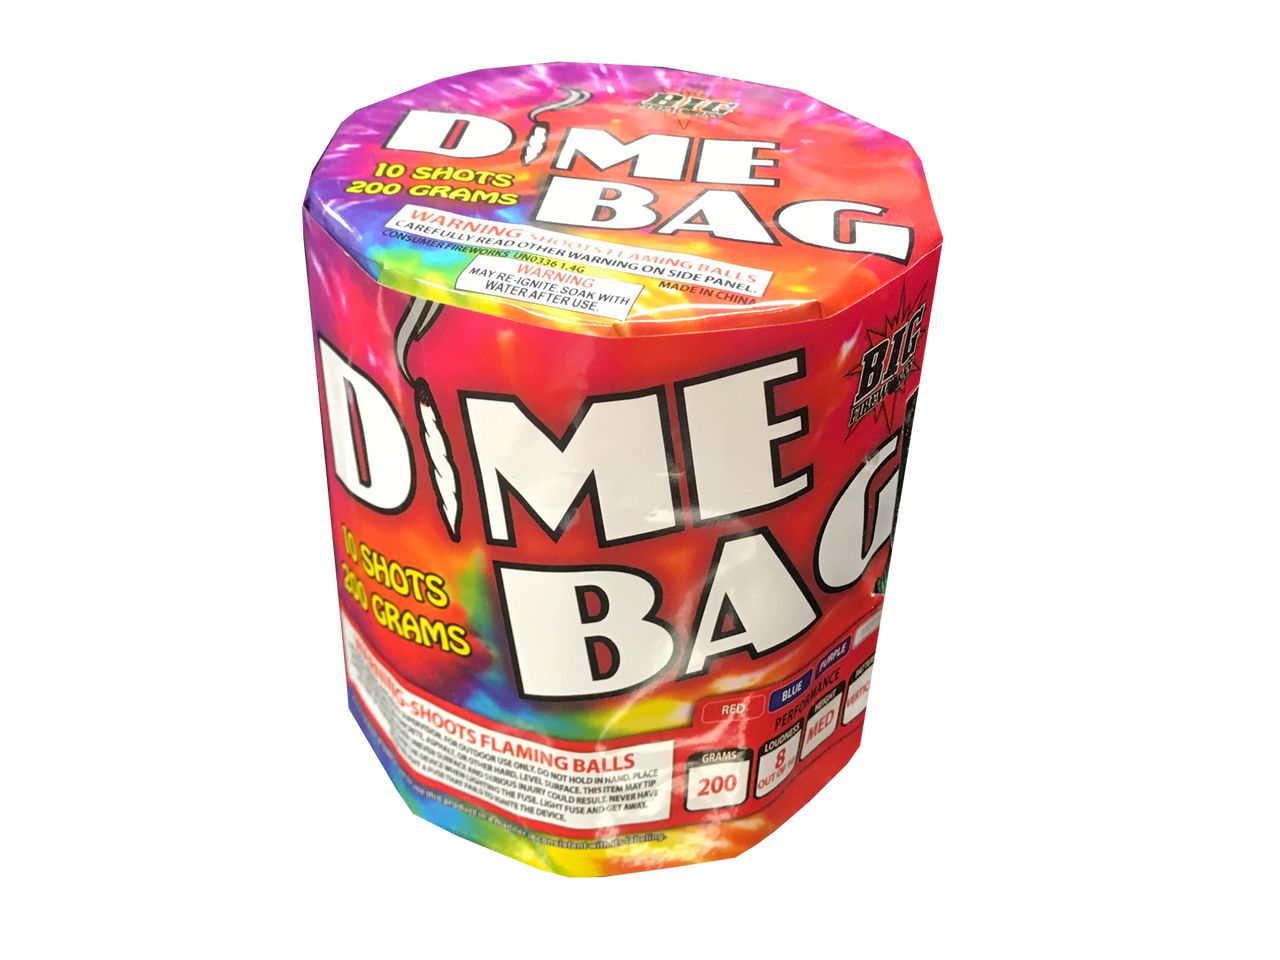 Dime Bags® (@dimebags) • Instagram photos and videos